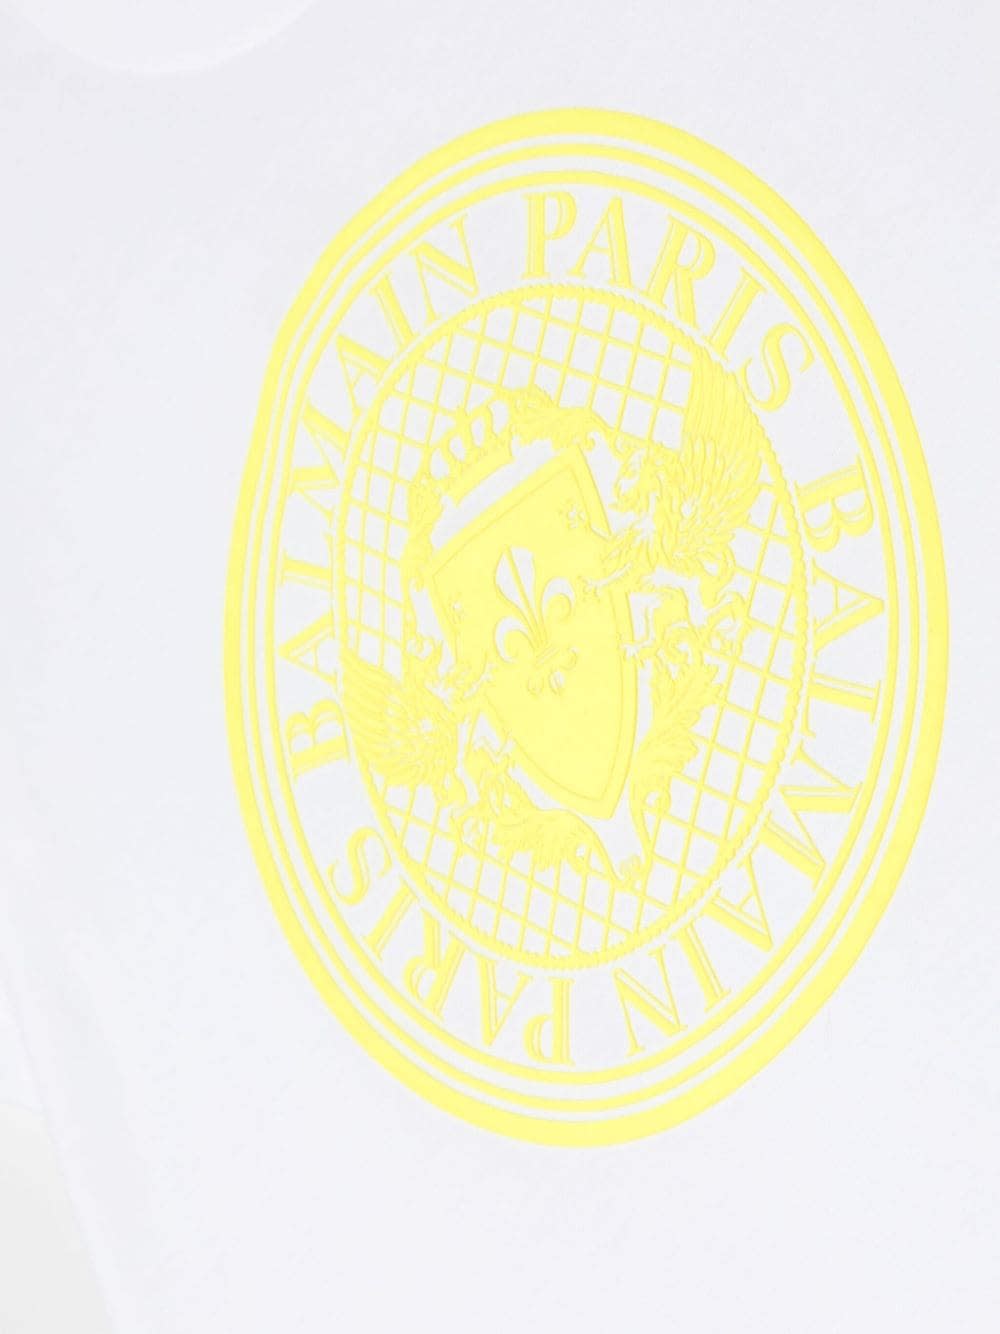 Shop Balmain White T-shirt With Rubberized Logo